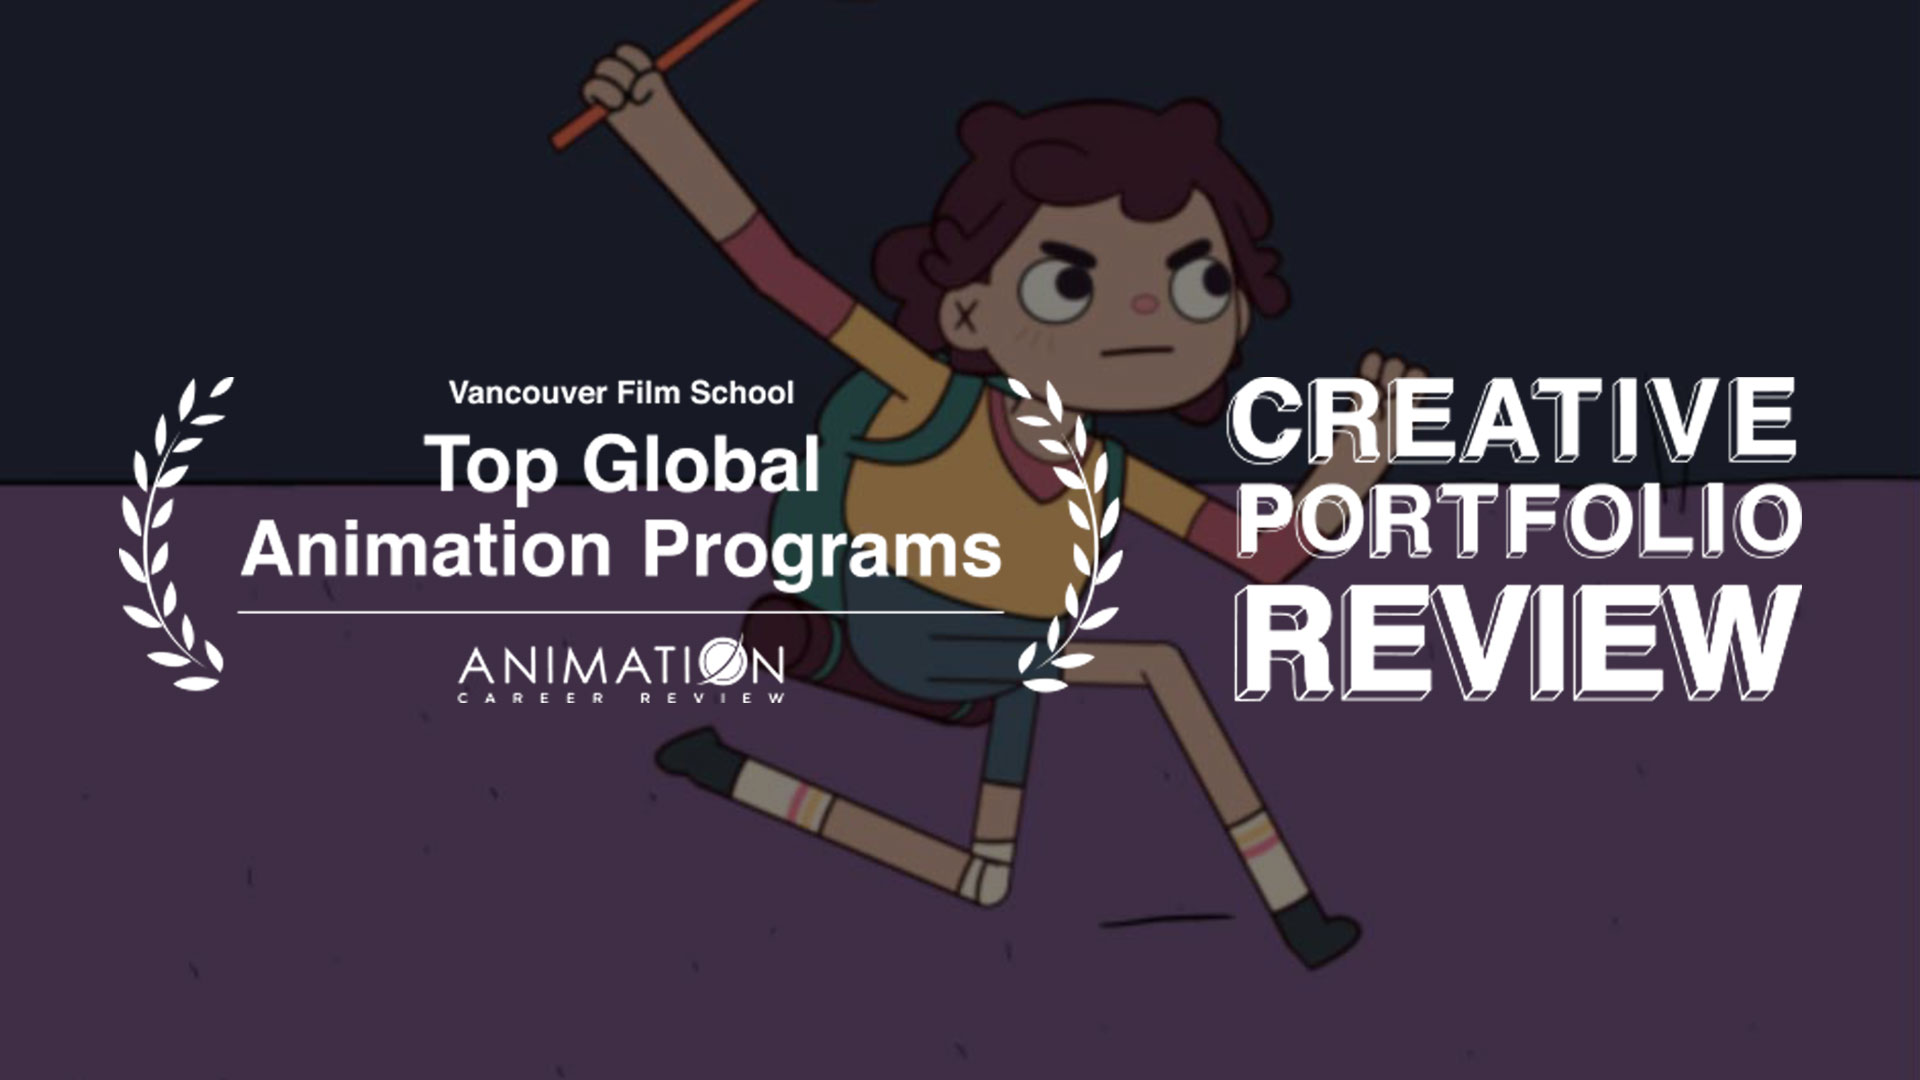 Animation Concept Art | Vancouver Film School